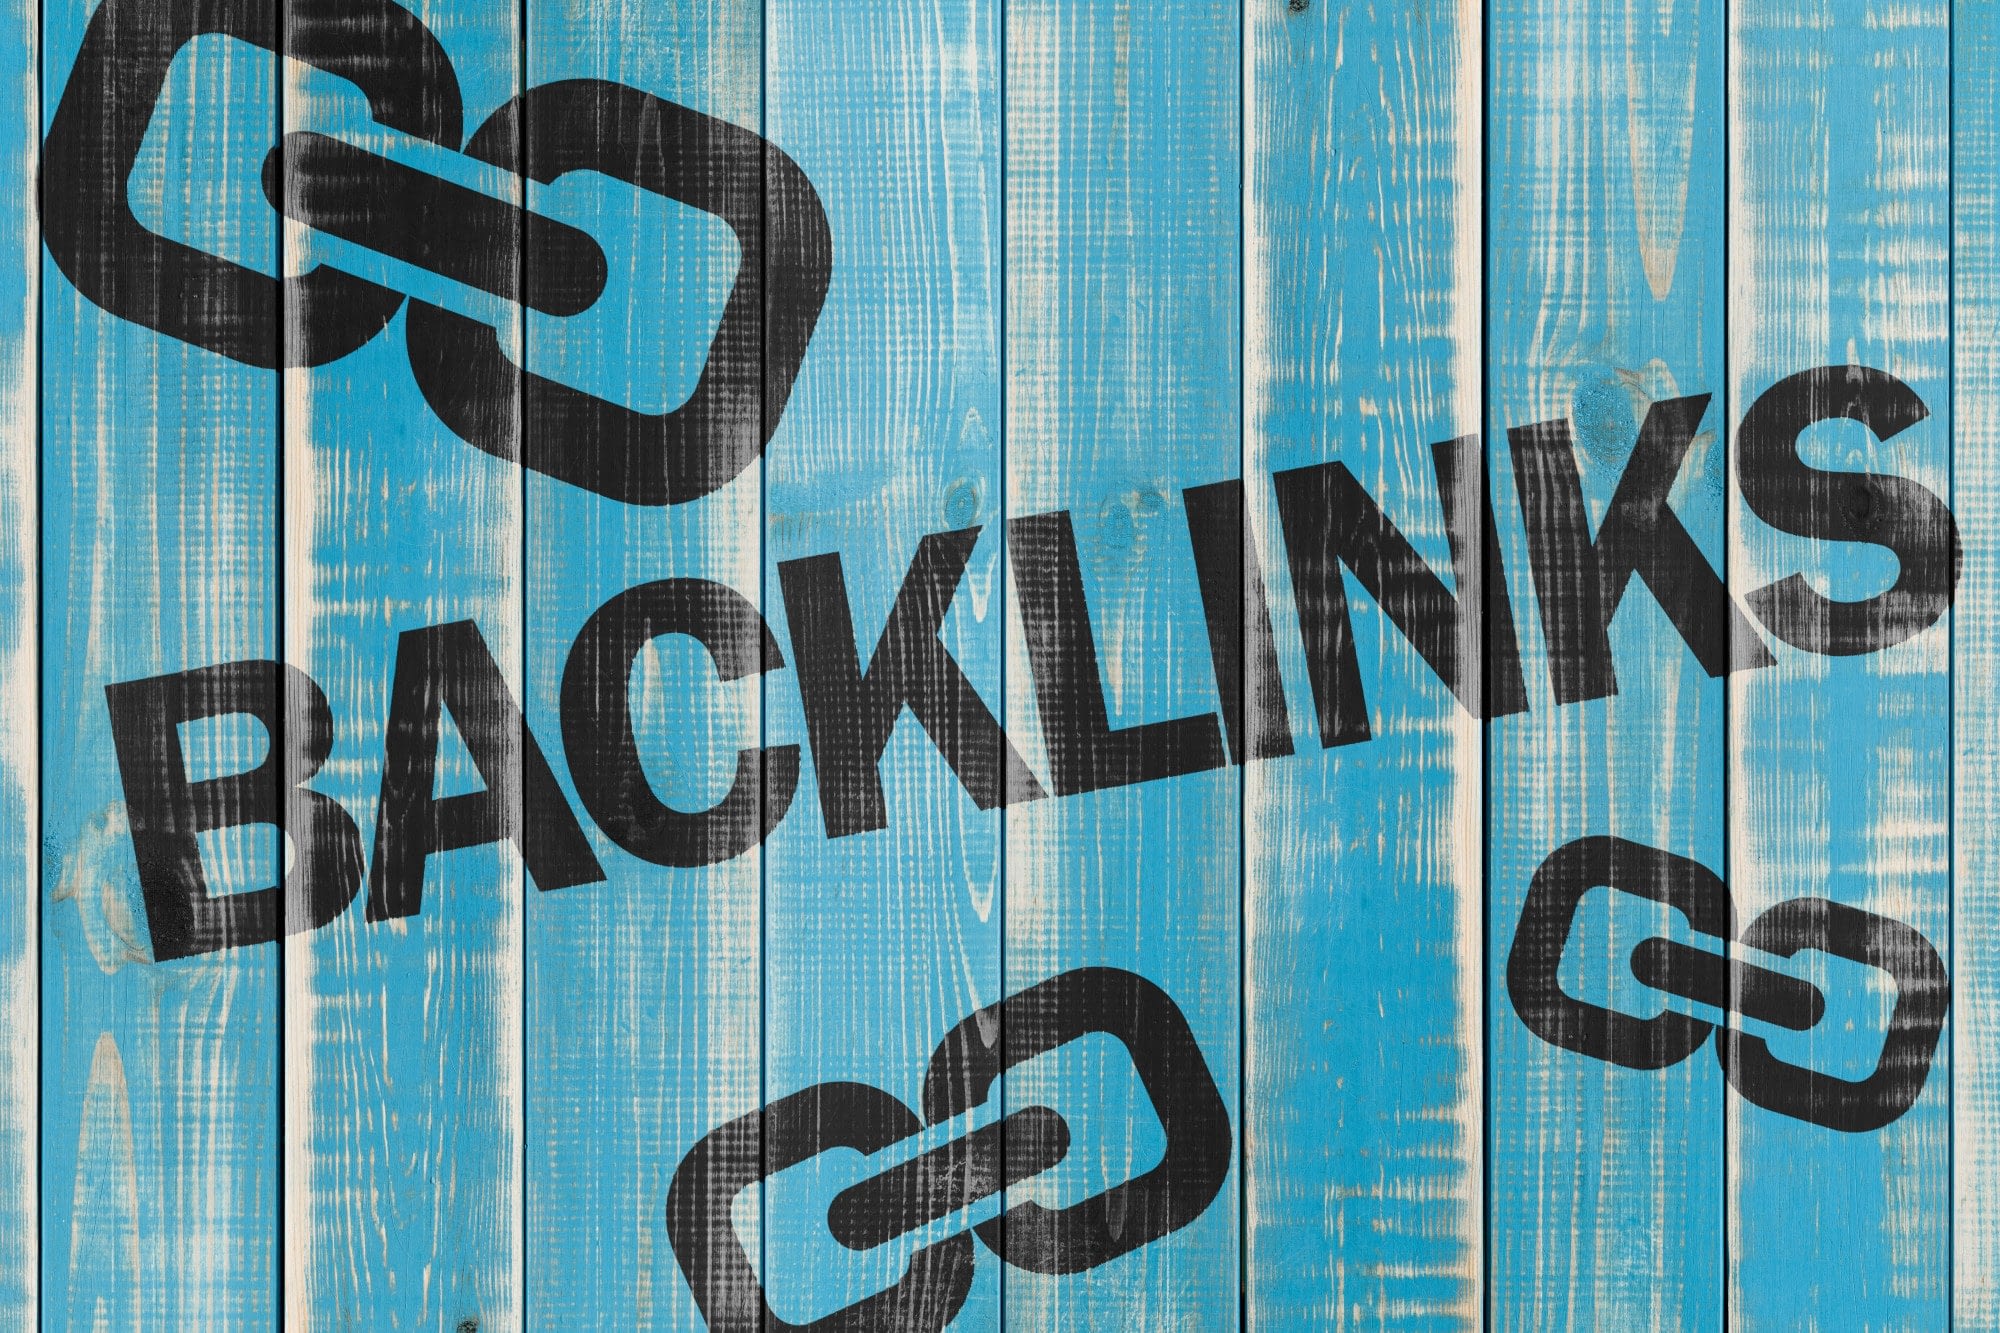 backlink strategy